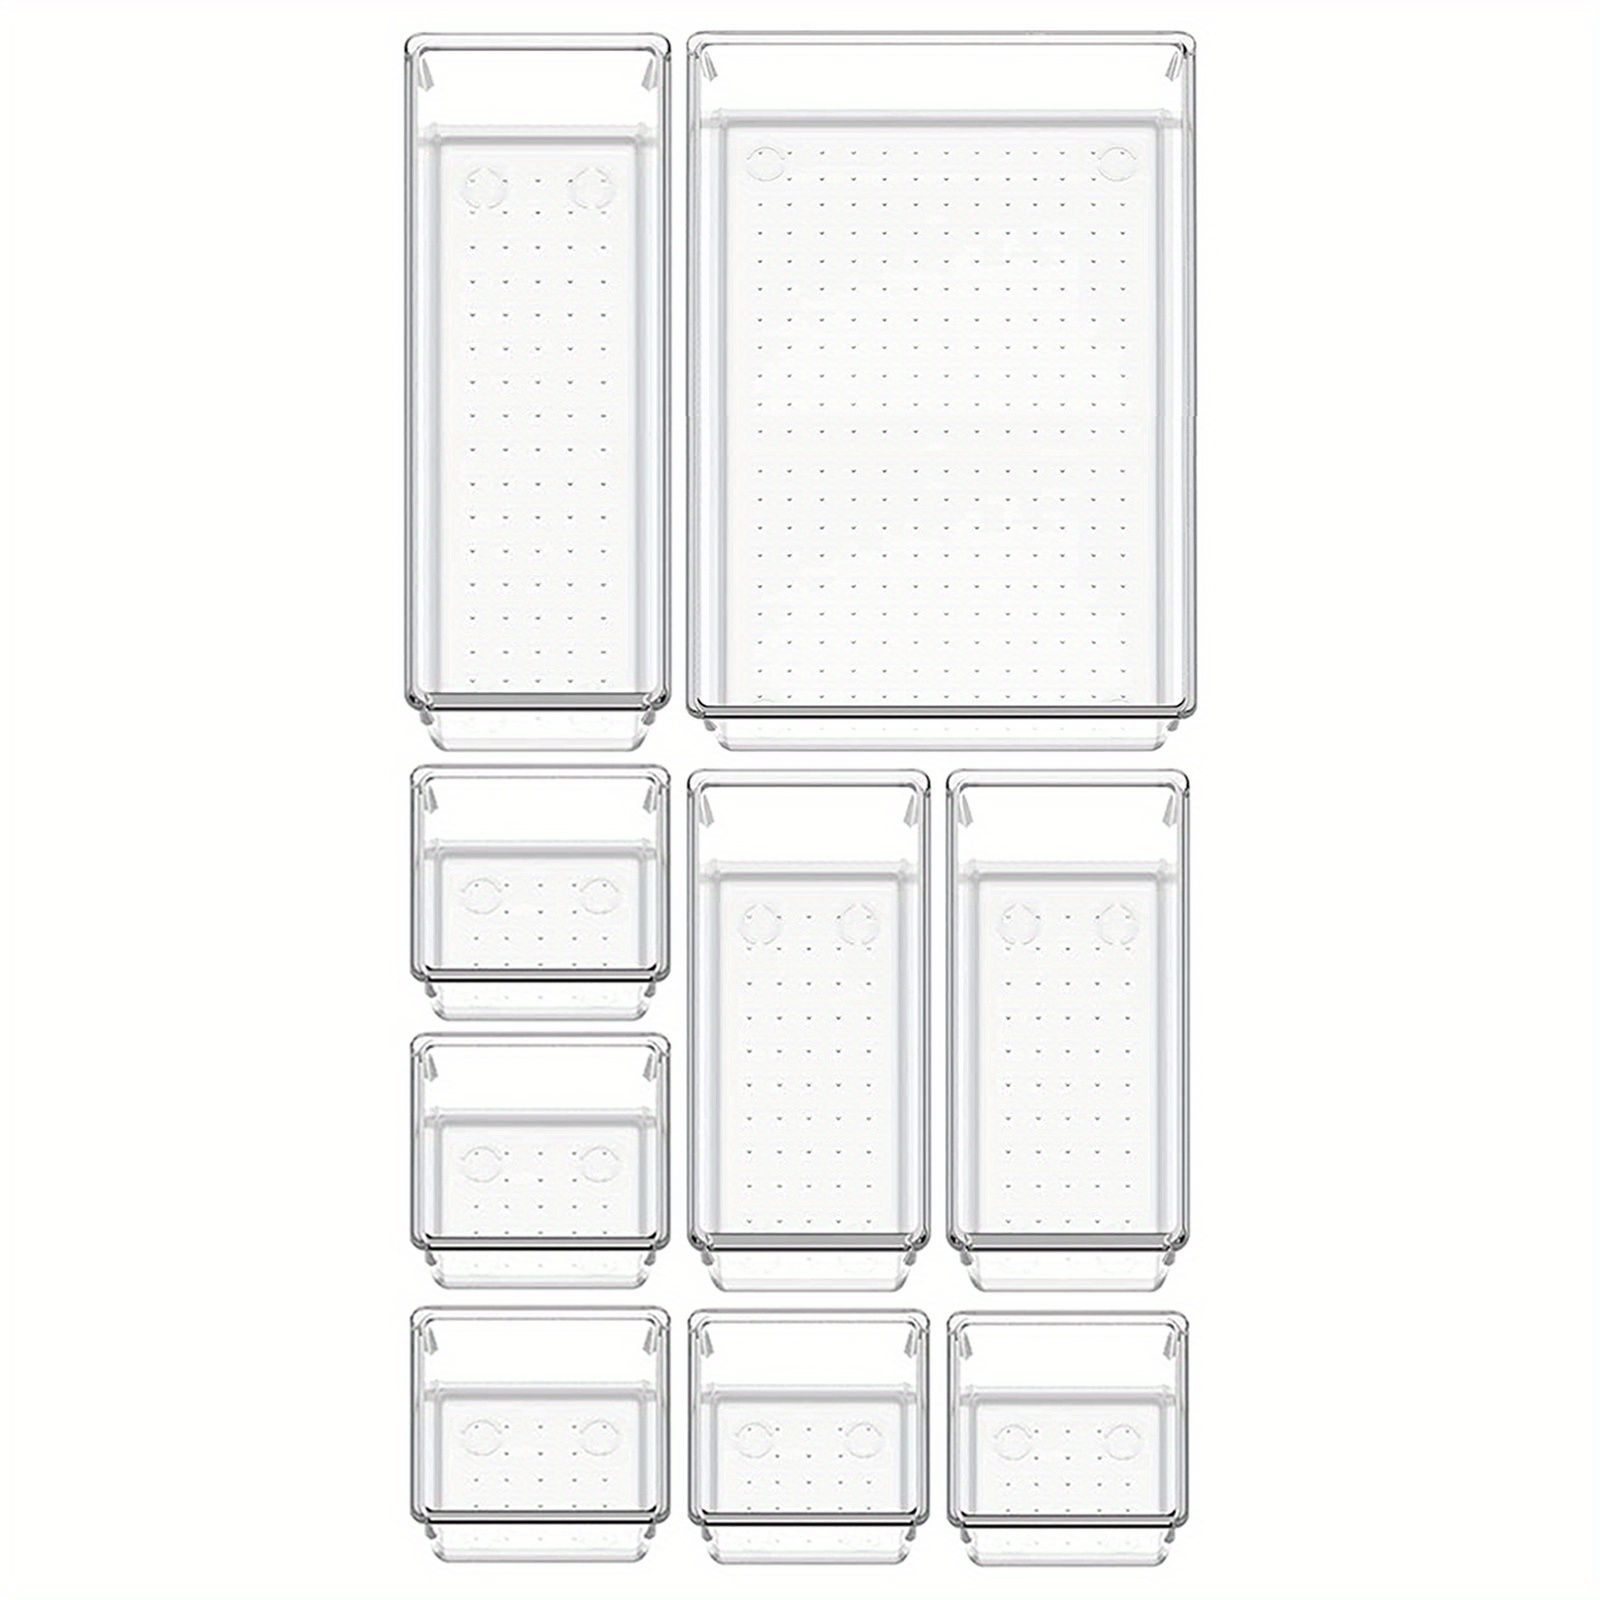 Kootek 11 pcs Clear Plastic Drawer Organizer Set, 4-Size Bathroom Draw